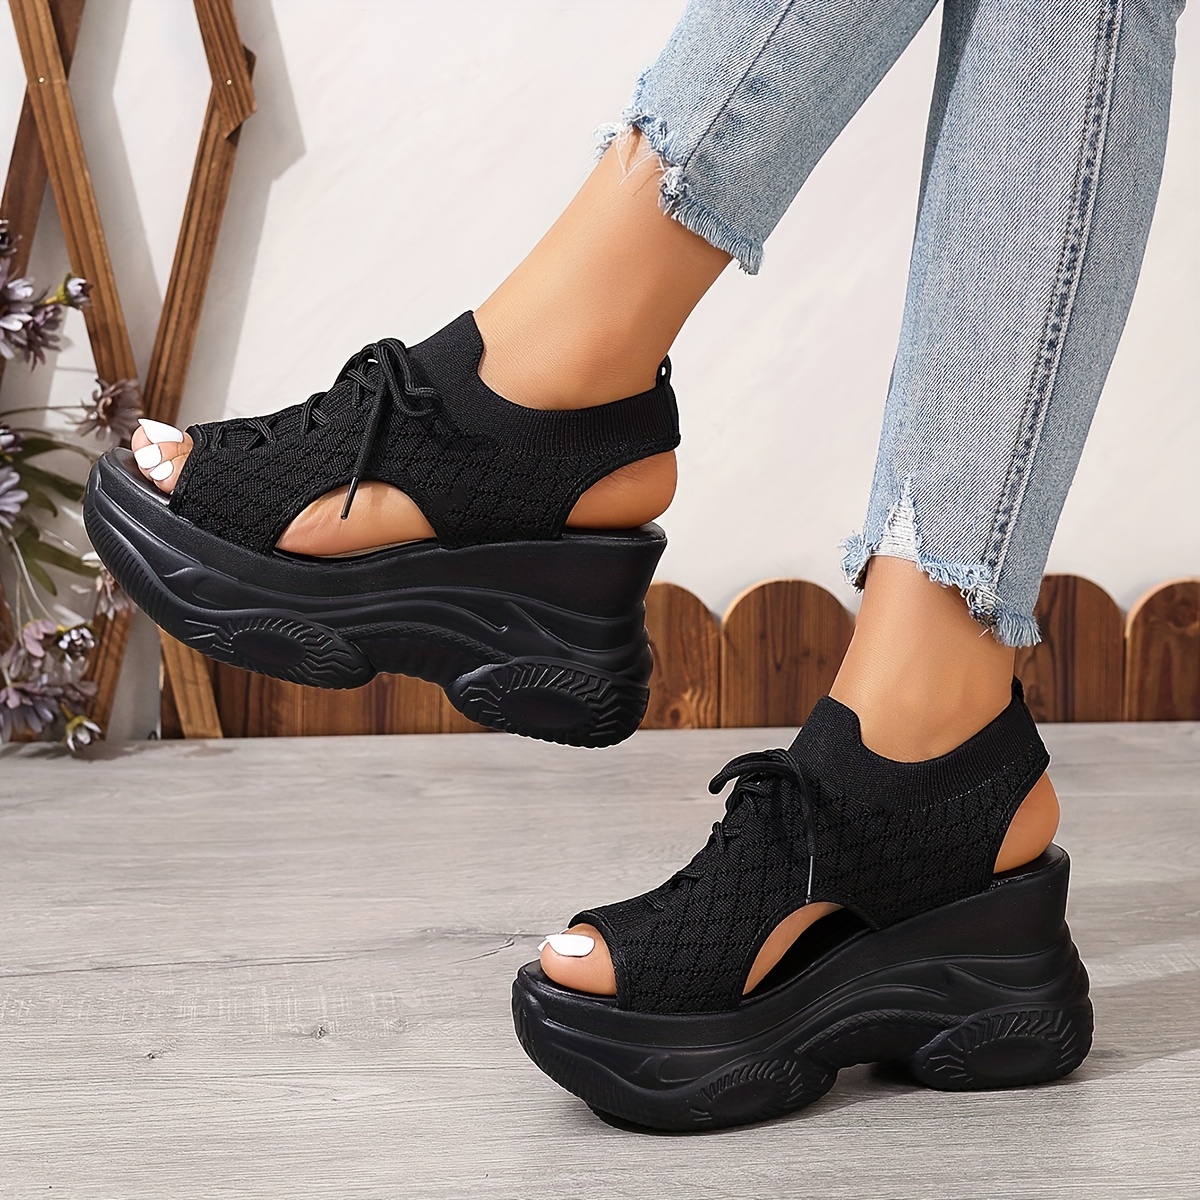 

Women's Summer Platform Wedge Sandals, Breathable Knit Elastic Upper, Open Toe Tie-up Comfort Sandals, Versatile Soft Sole High-heel Casual Shoes